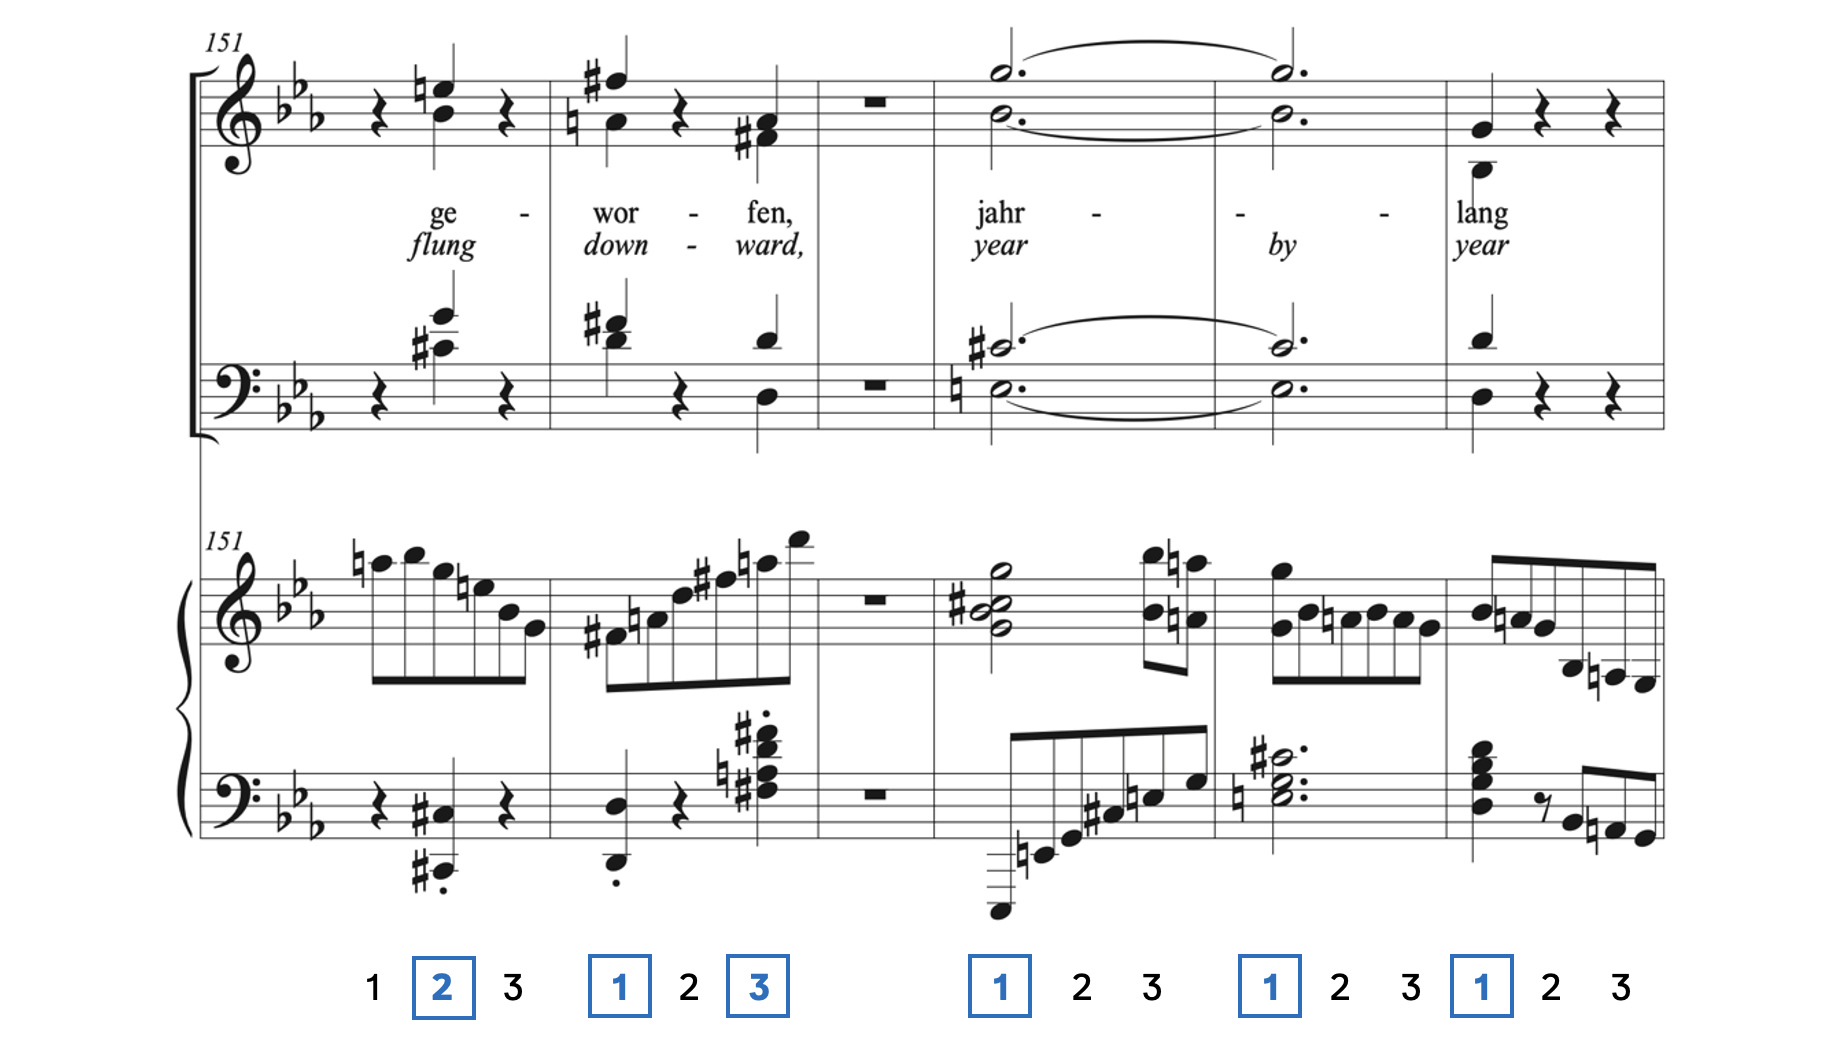 Part 3 of Brahms's Schicksalslied, where the triple meter returns.